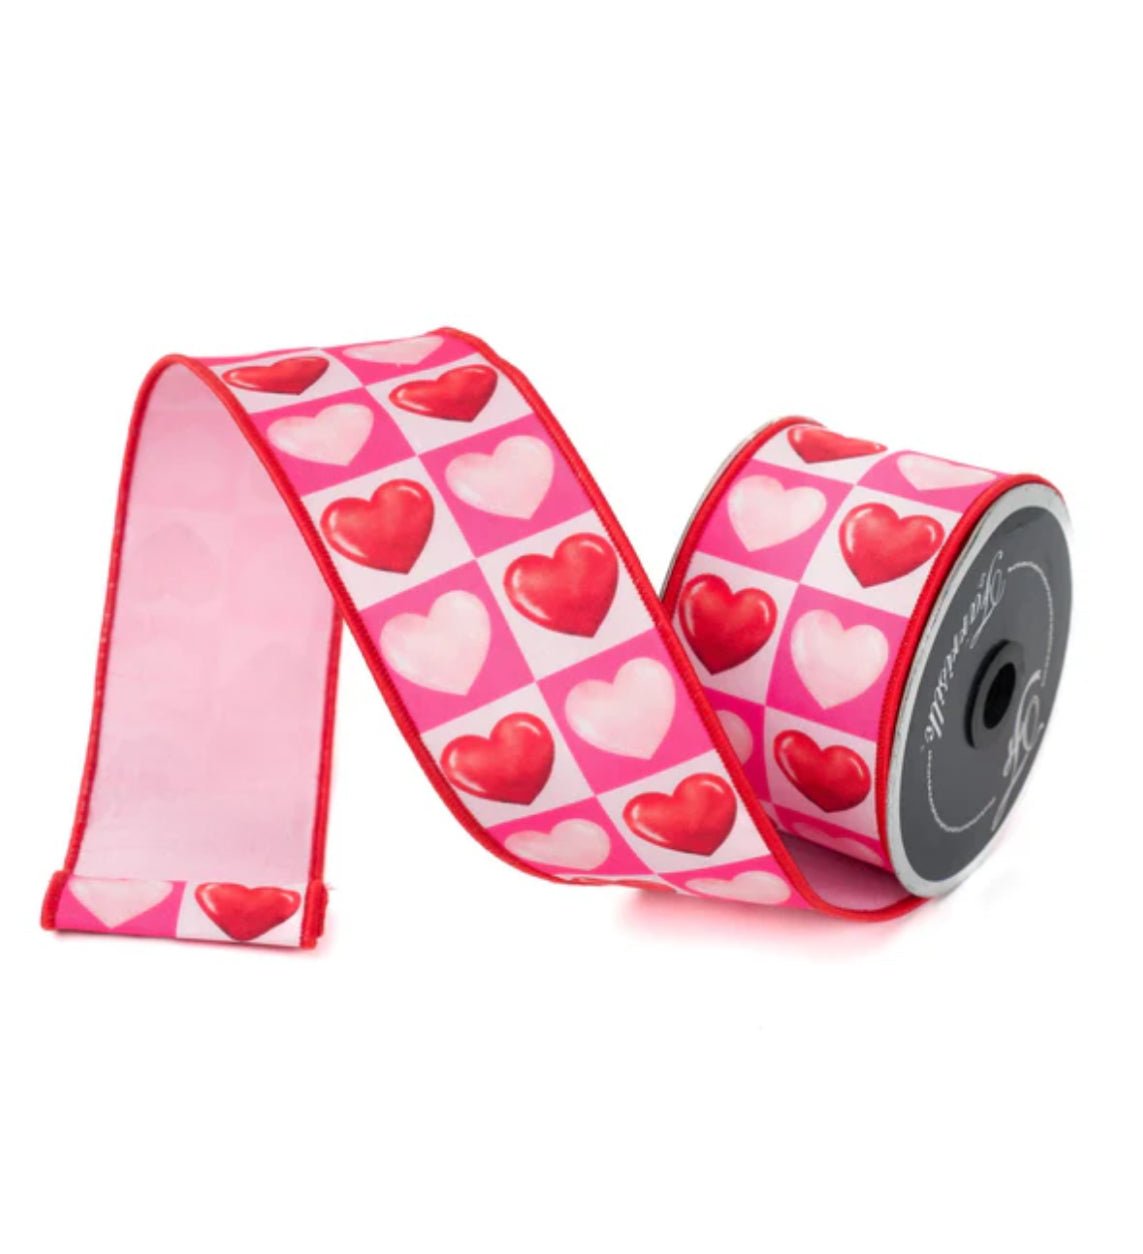 Candy Hearts ribbon 2.5” farrisilk wired ribbon - Greenery MarketRibbons & TrimRK559-02